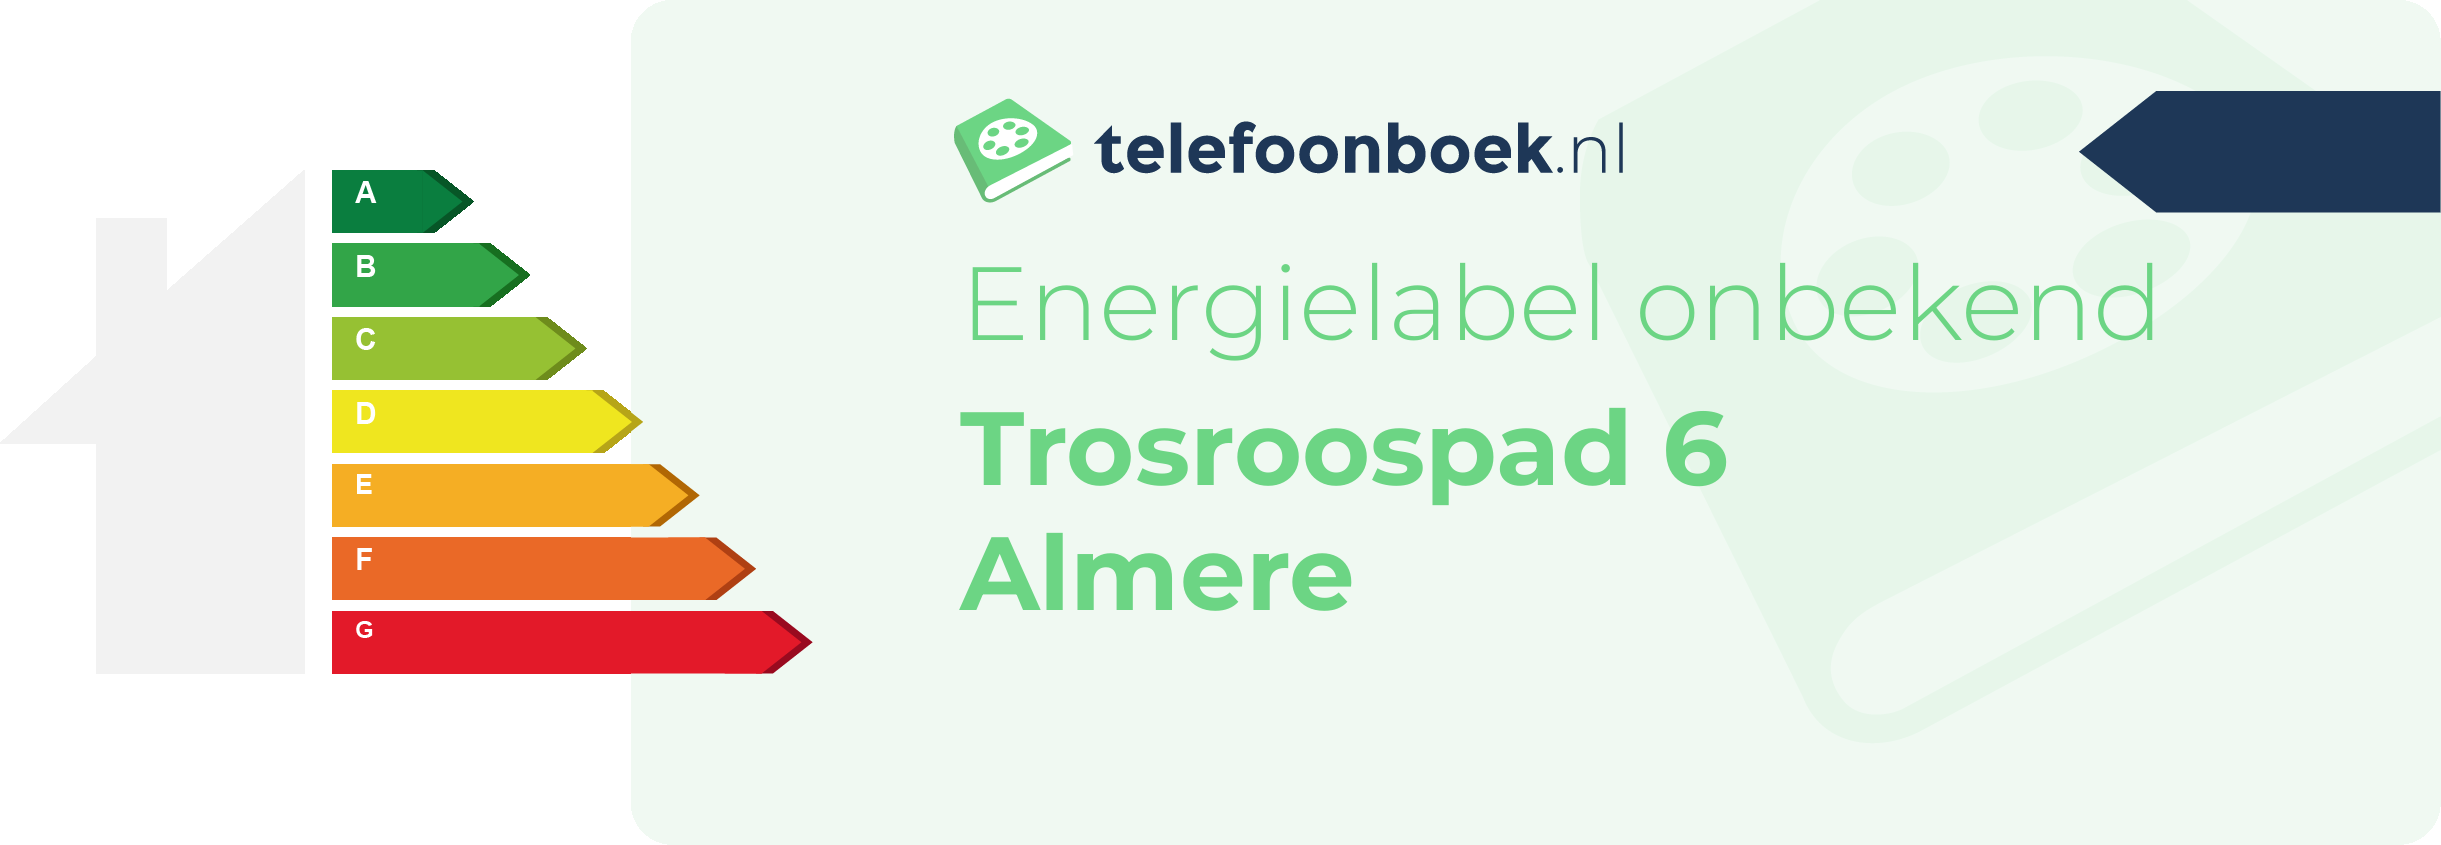 Energielabel Trosroospad 6 Almere